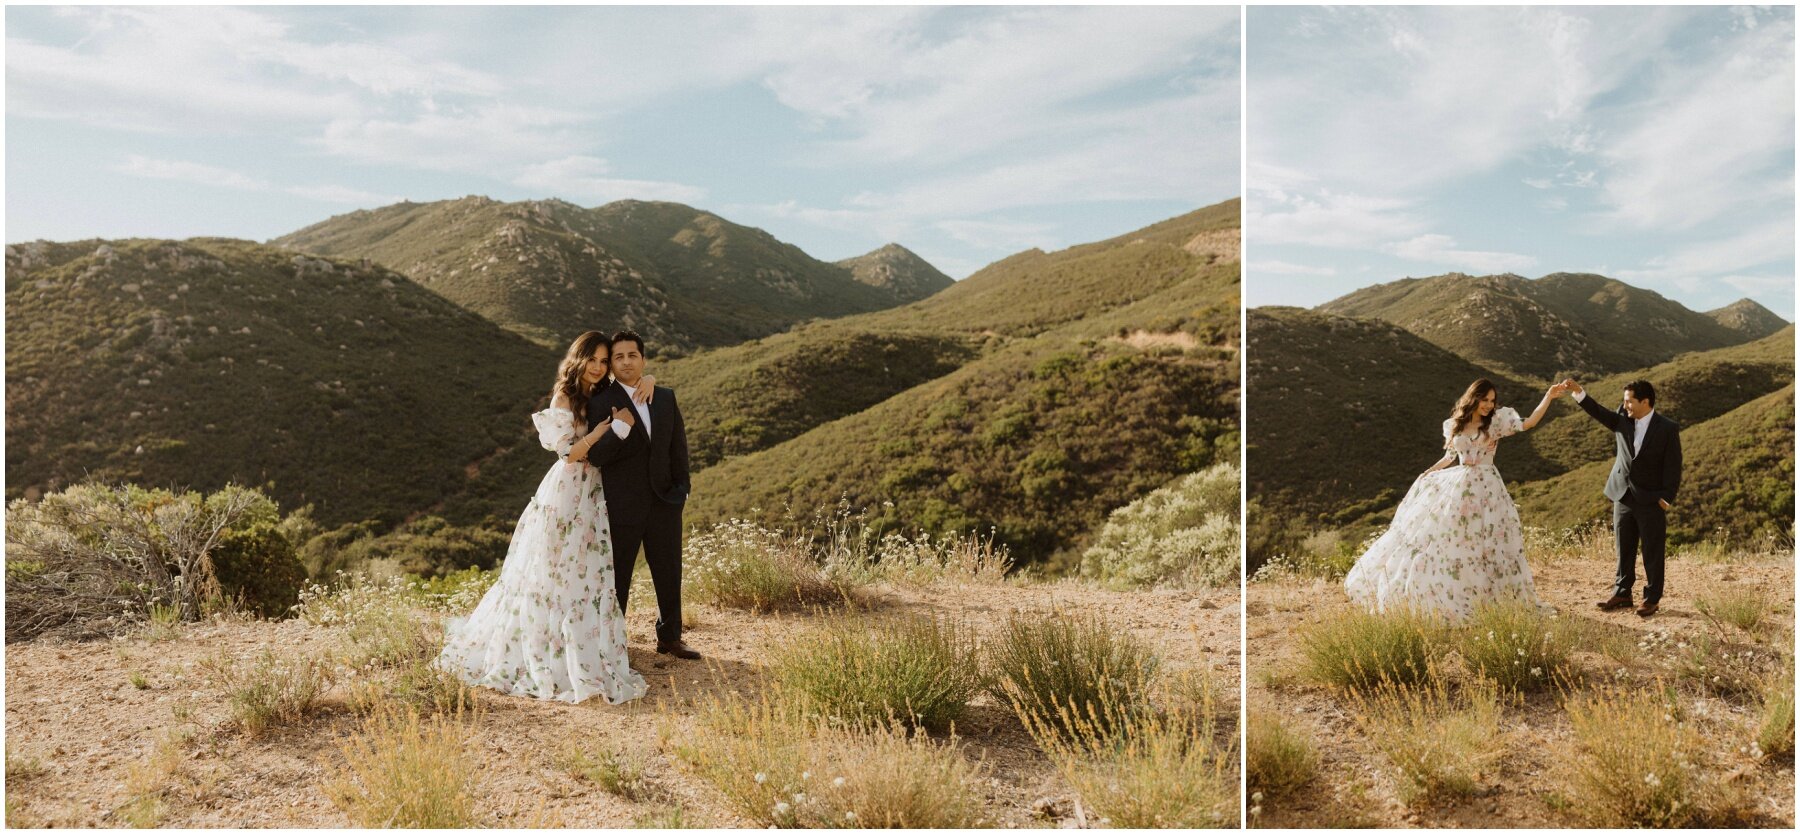 desert engagement session in california - erika greene photography - couples photographer_0006.jpg